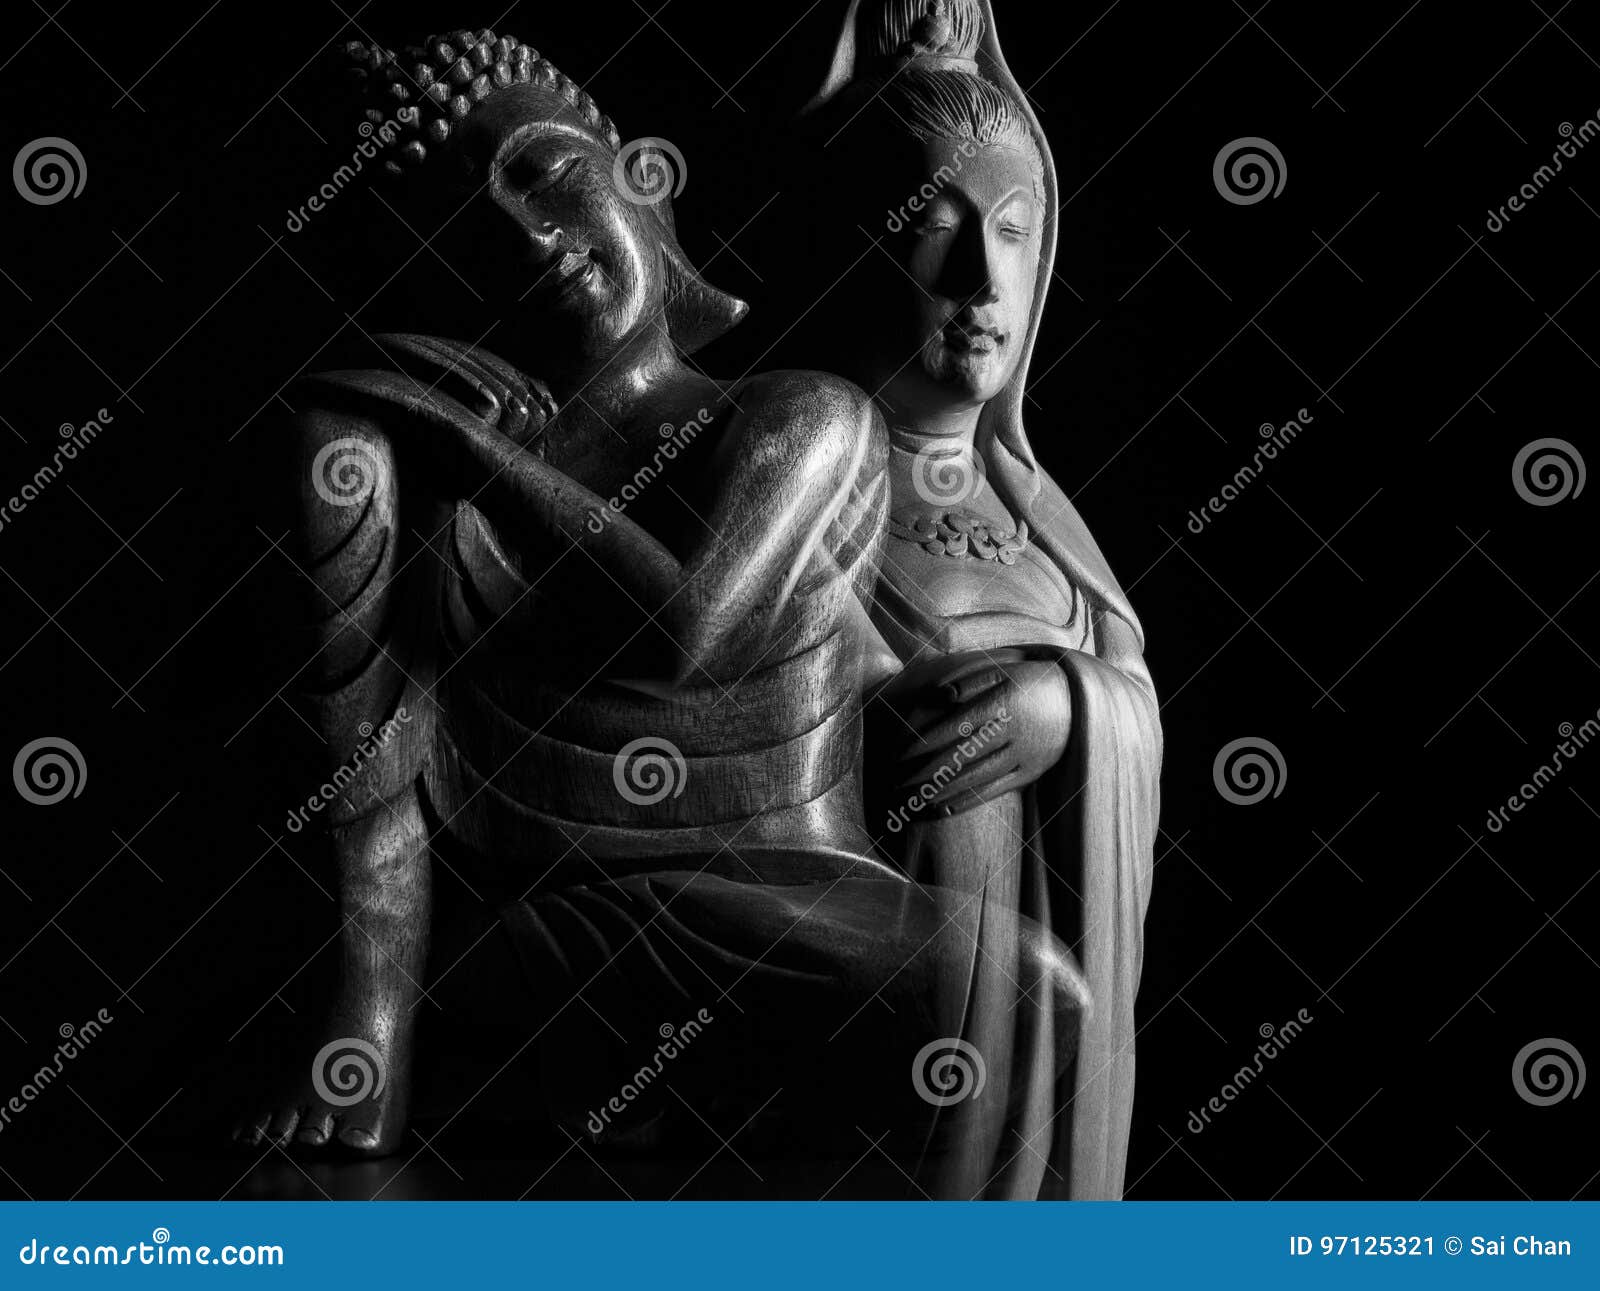 buddha and avalokitasvara bodhisattva/guan yin/guanshiyin sculpture